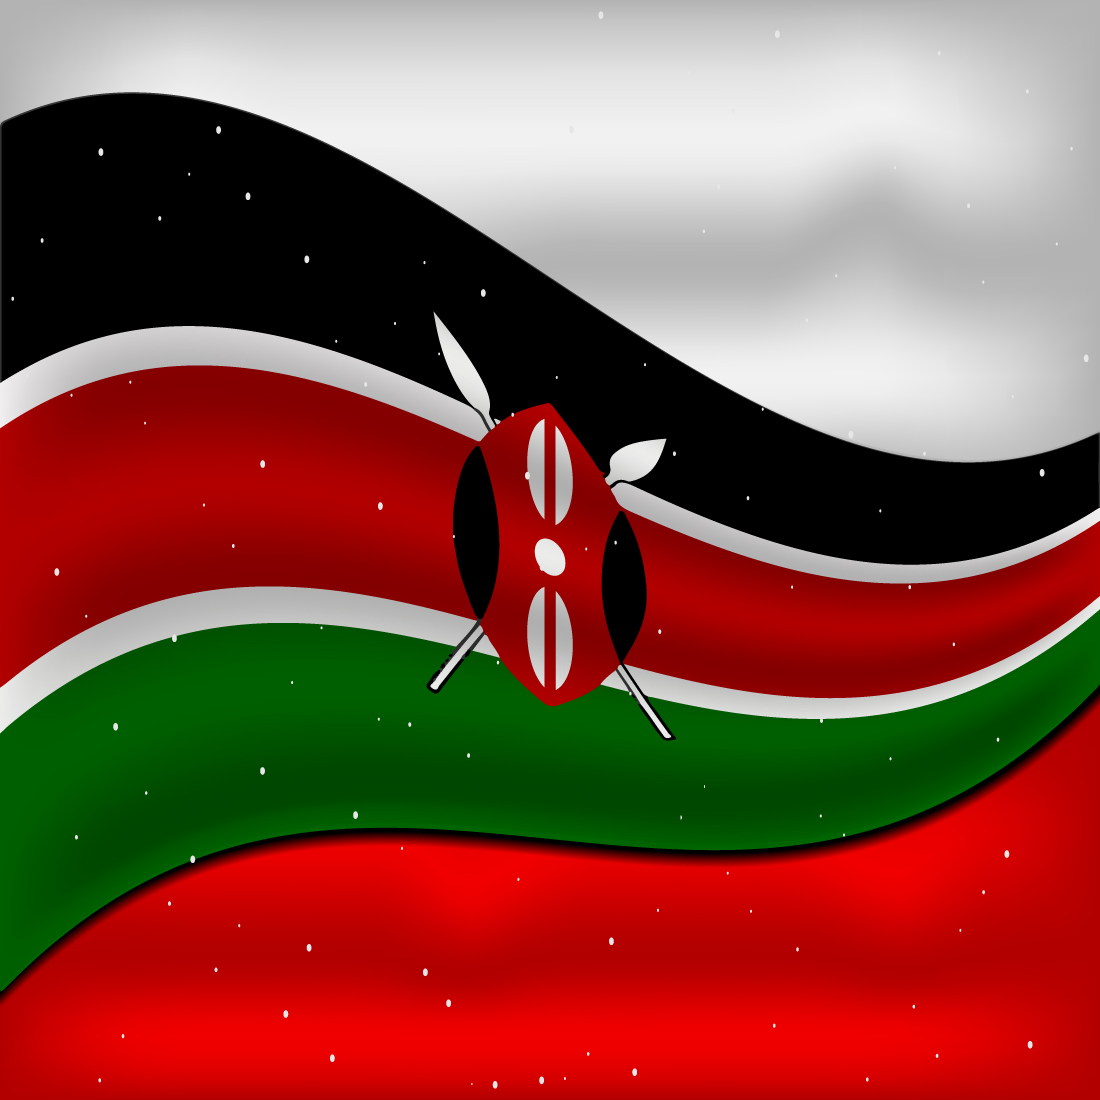 Irresistible flag image of Kenya.